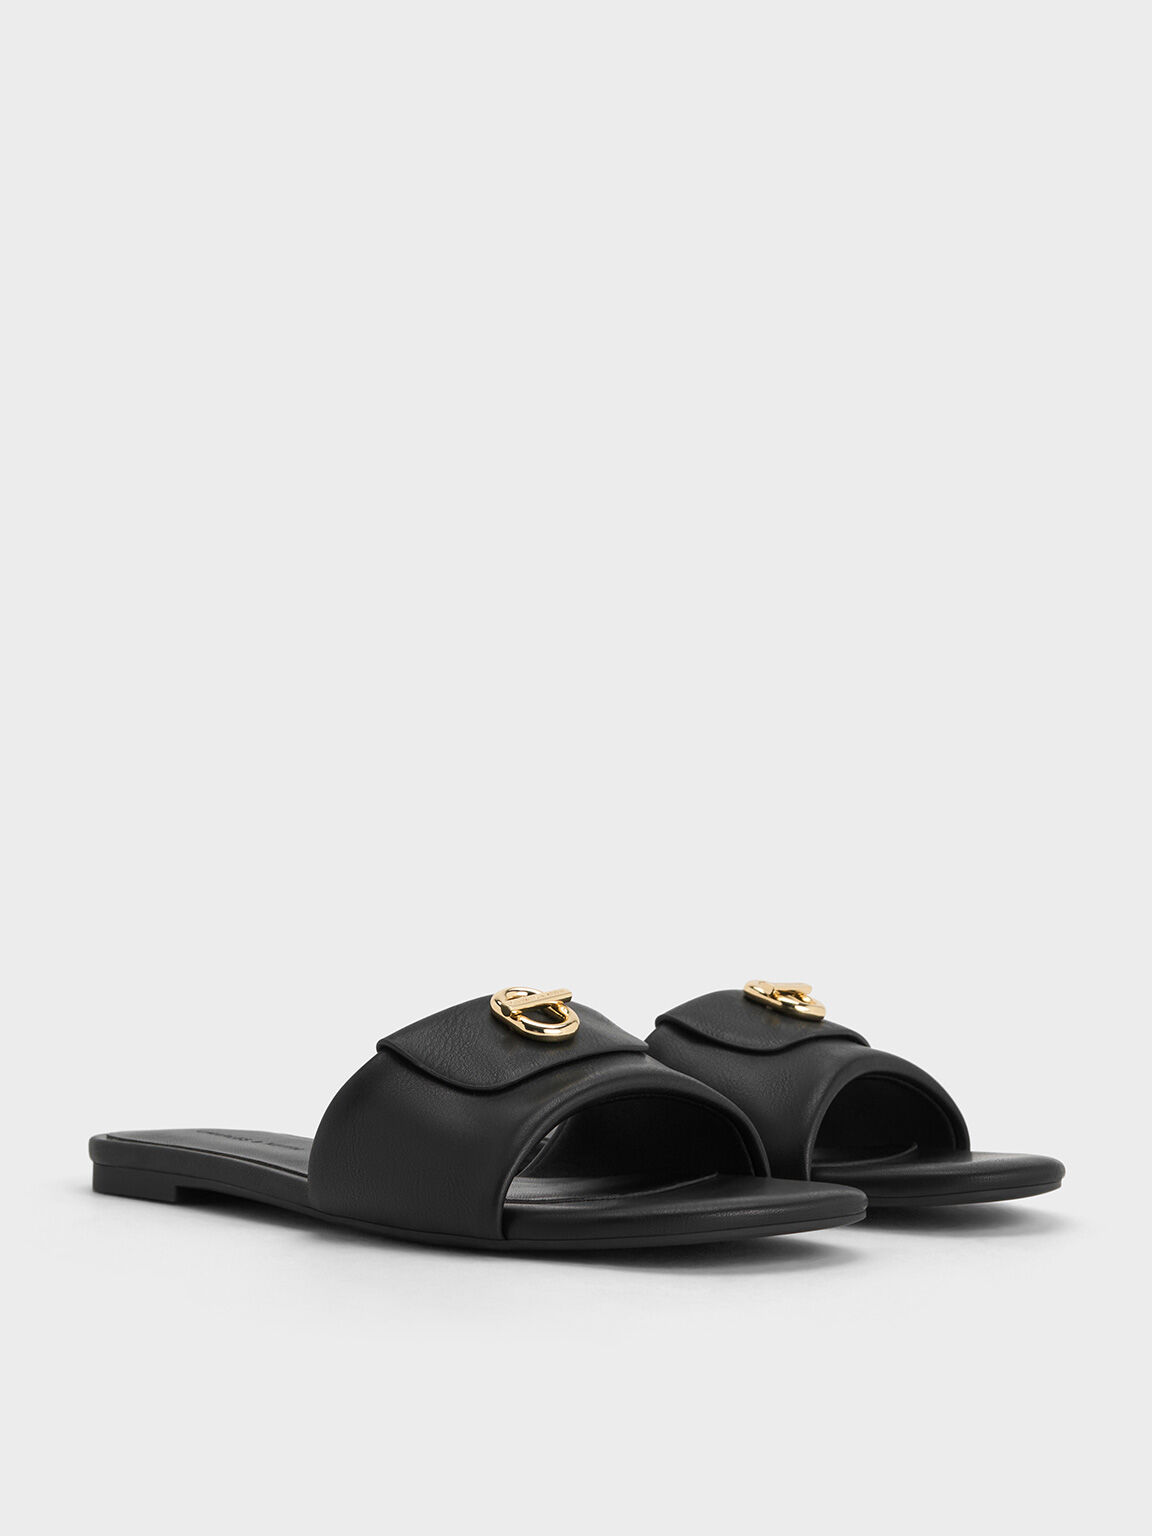 Metallic-Accent Slide Sandals, Black, hi-res